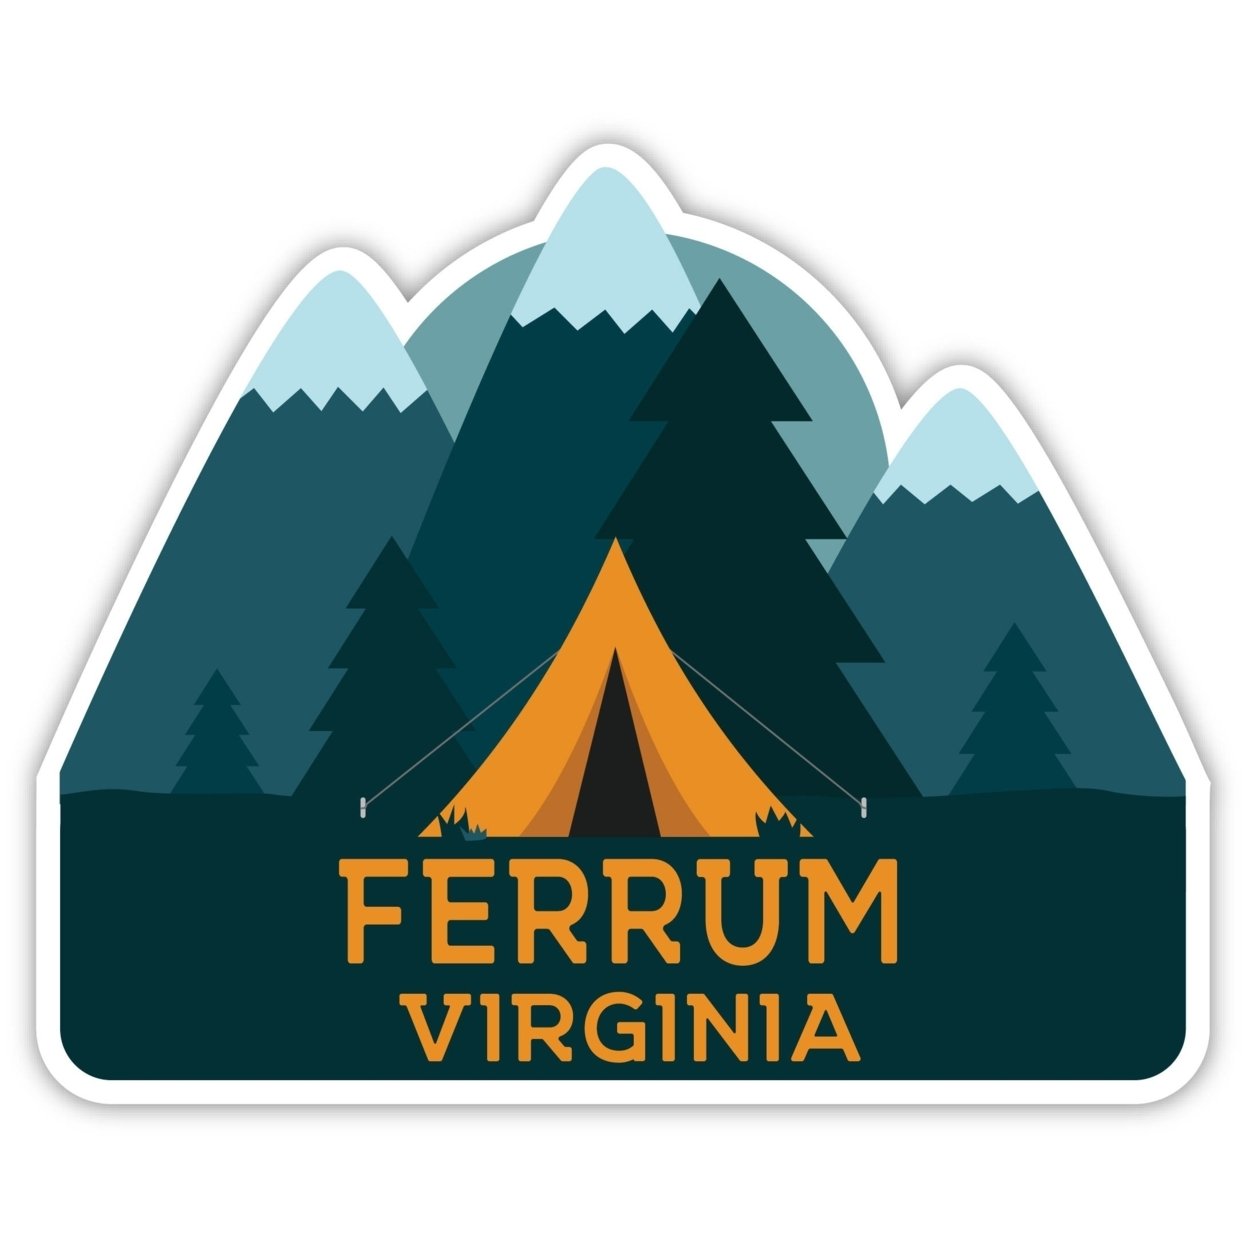 Ferrum Virginia Souvenir Decorative Stickers (Choose Theme And Size) - 4-Pack, 10-Inch, Tent